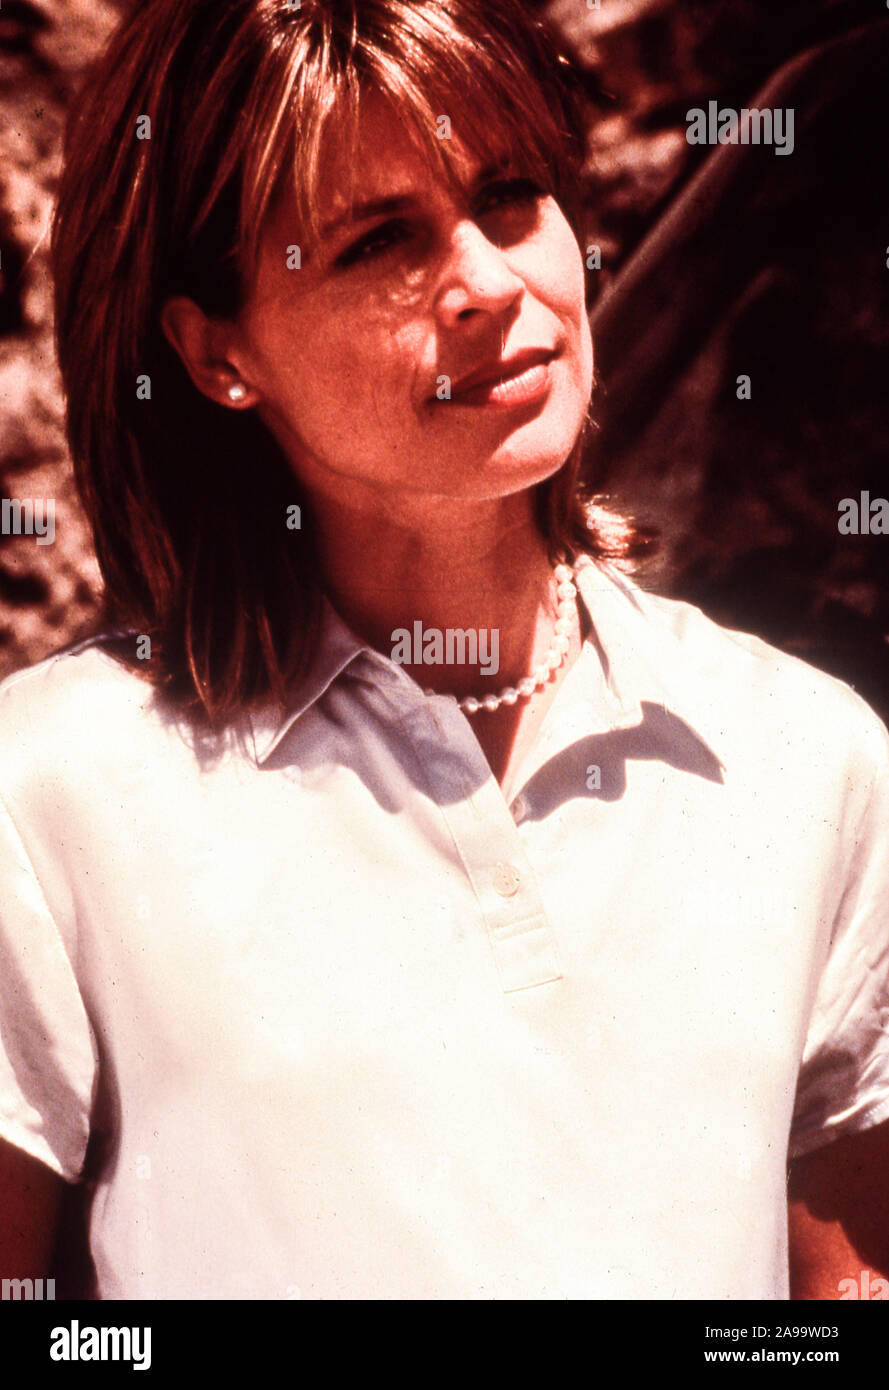 linda hamilton, dante's peak, 1997 Stock Photo